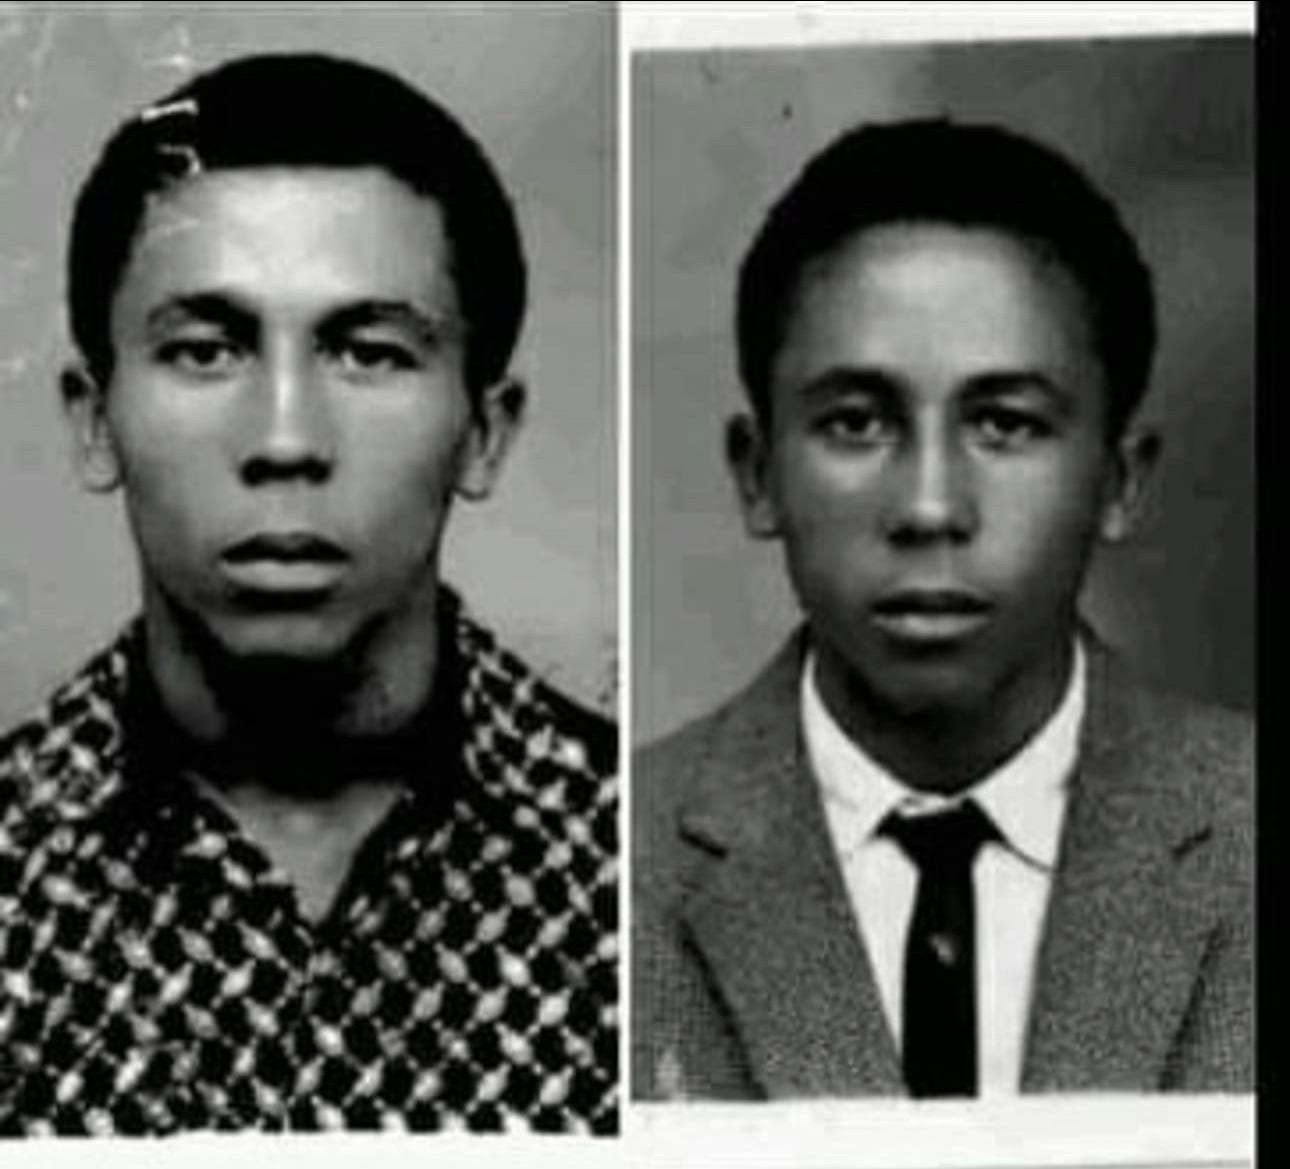 Bob Marley's passport photo